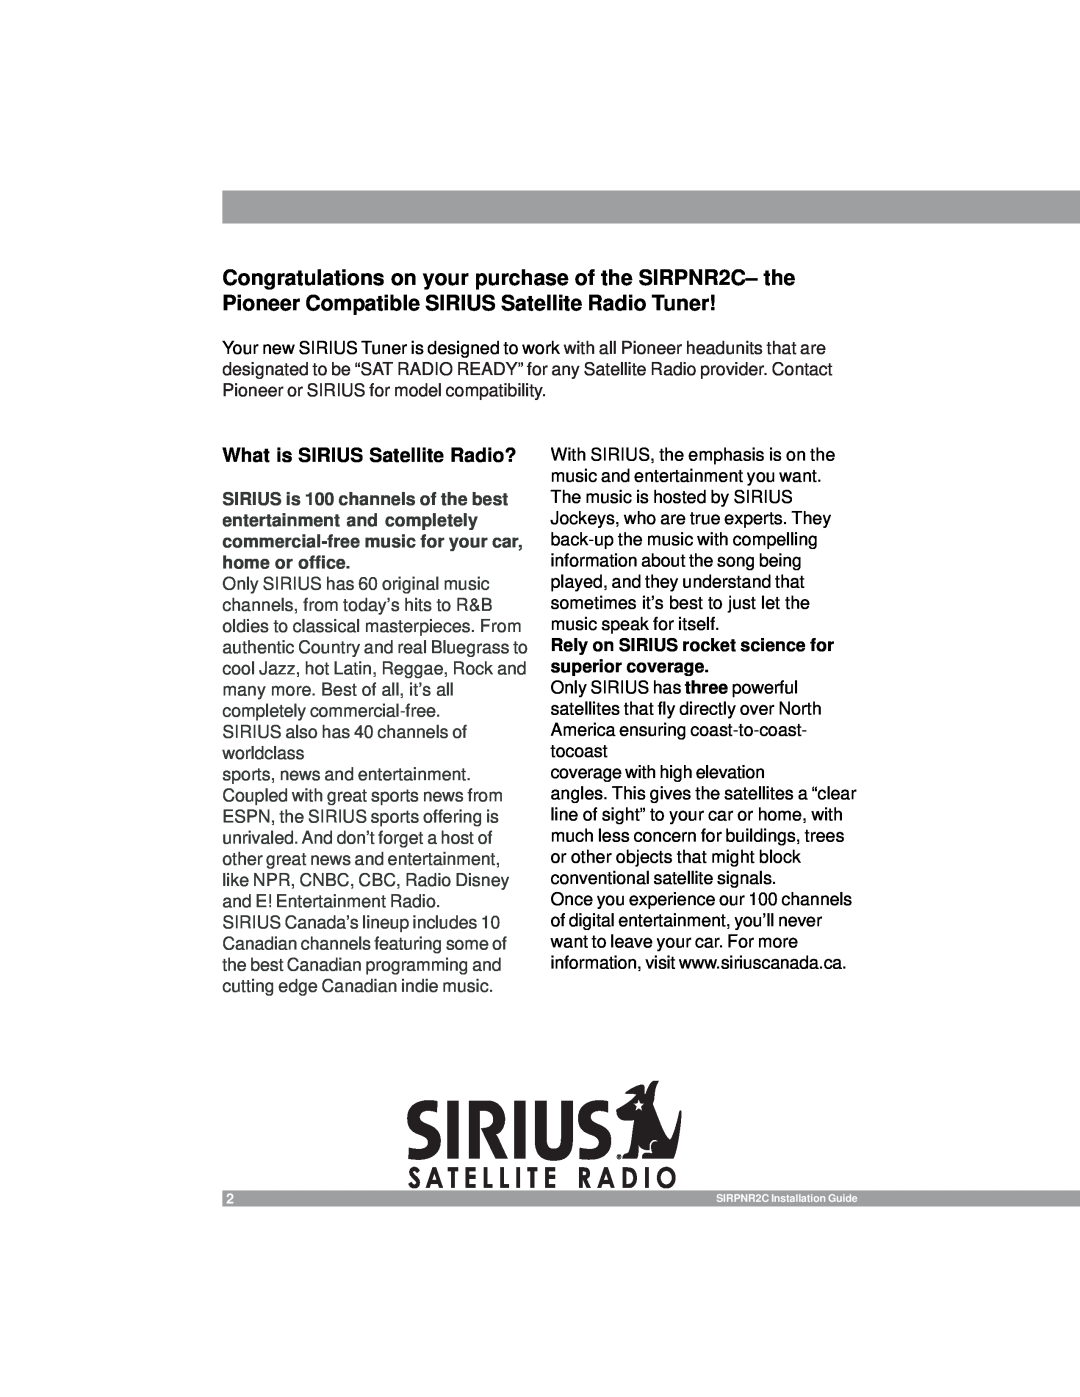 Sirius Satellite Radio SIRPNR2C manual What is SIRIUS Satellite Radio? 